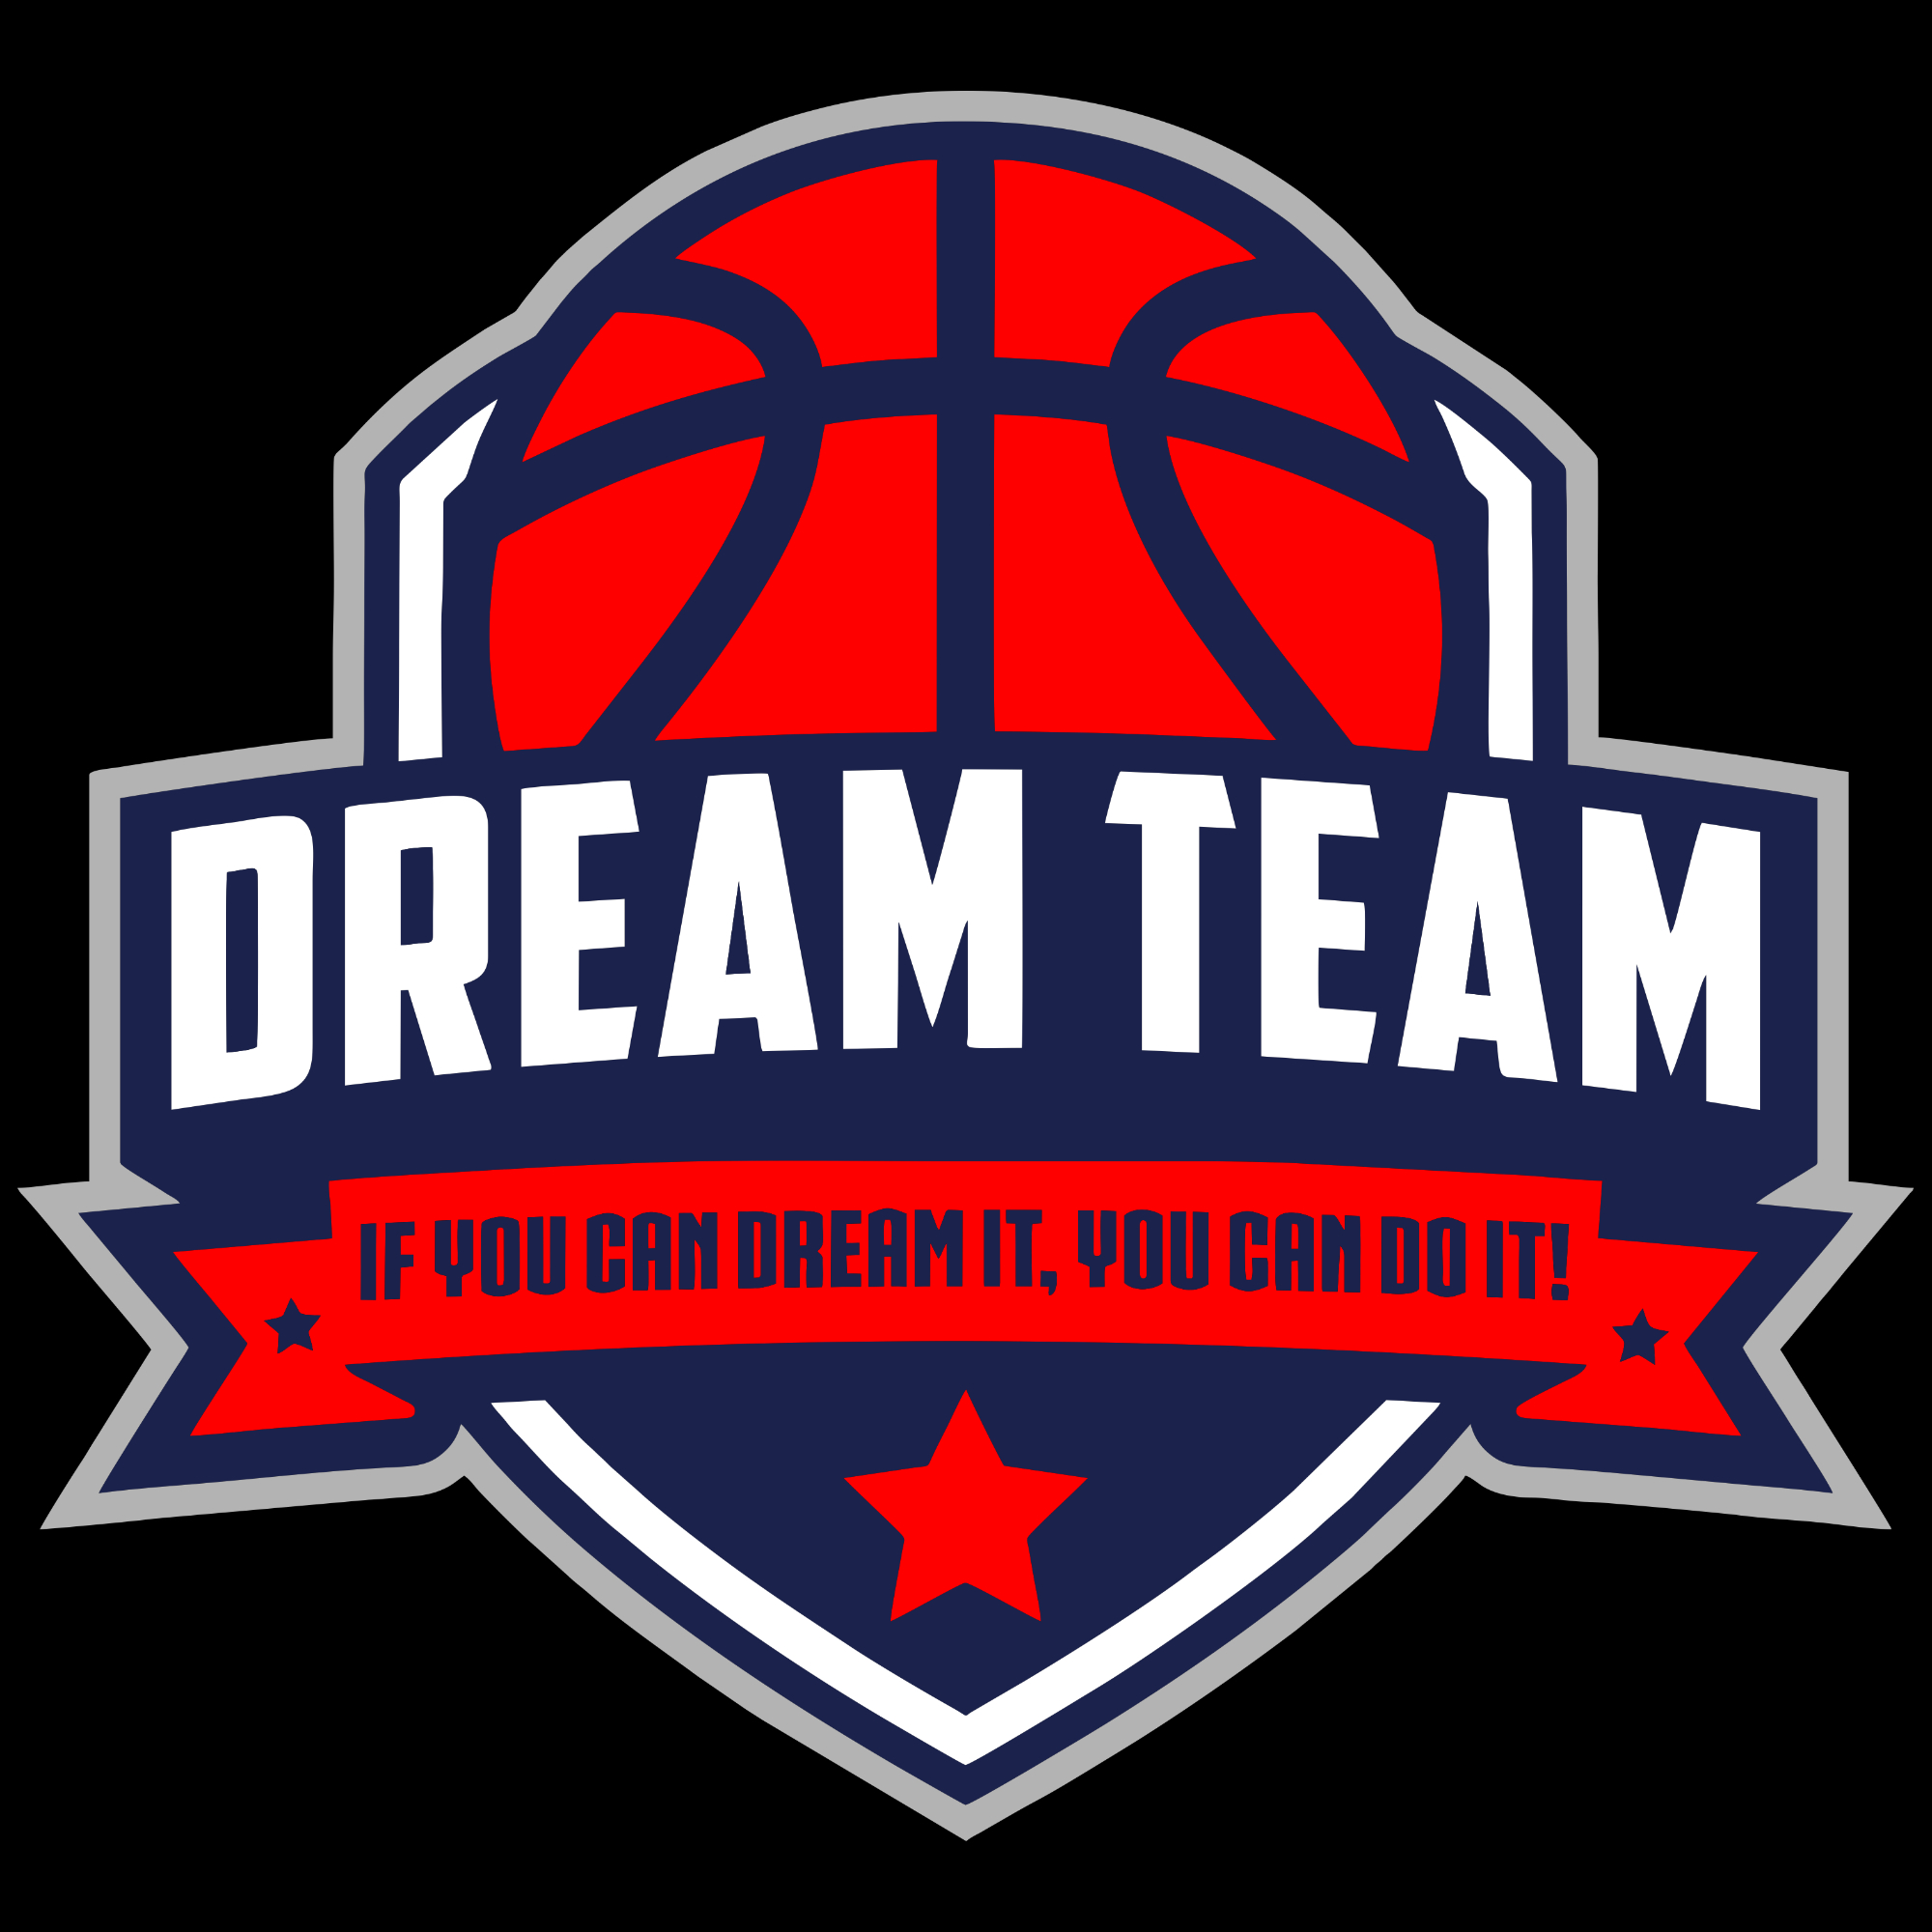 The official logo of Dream Team